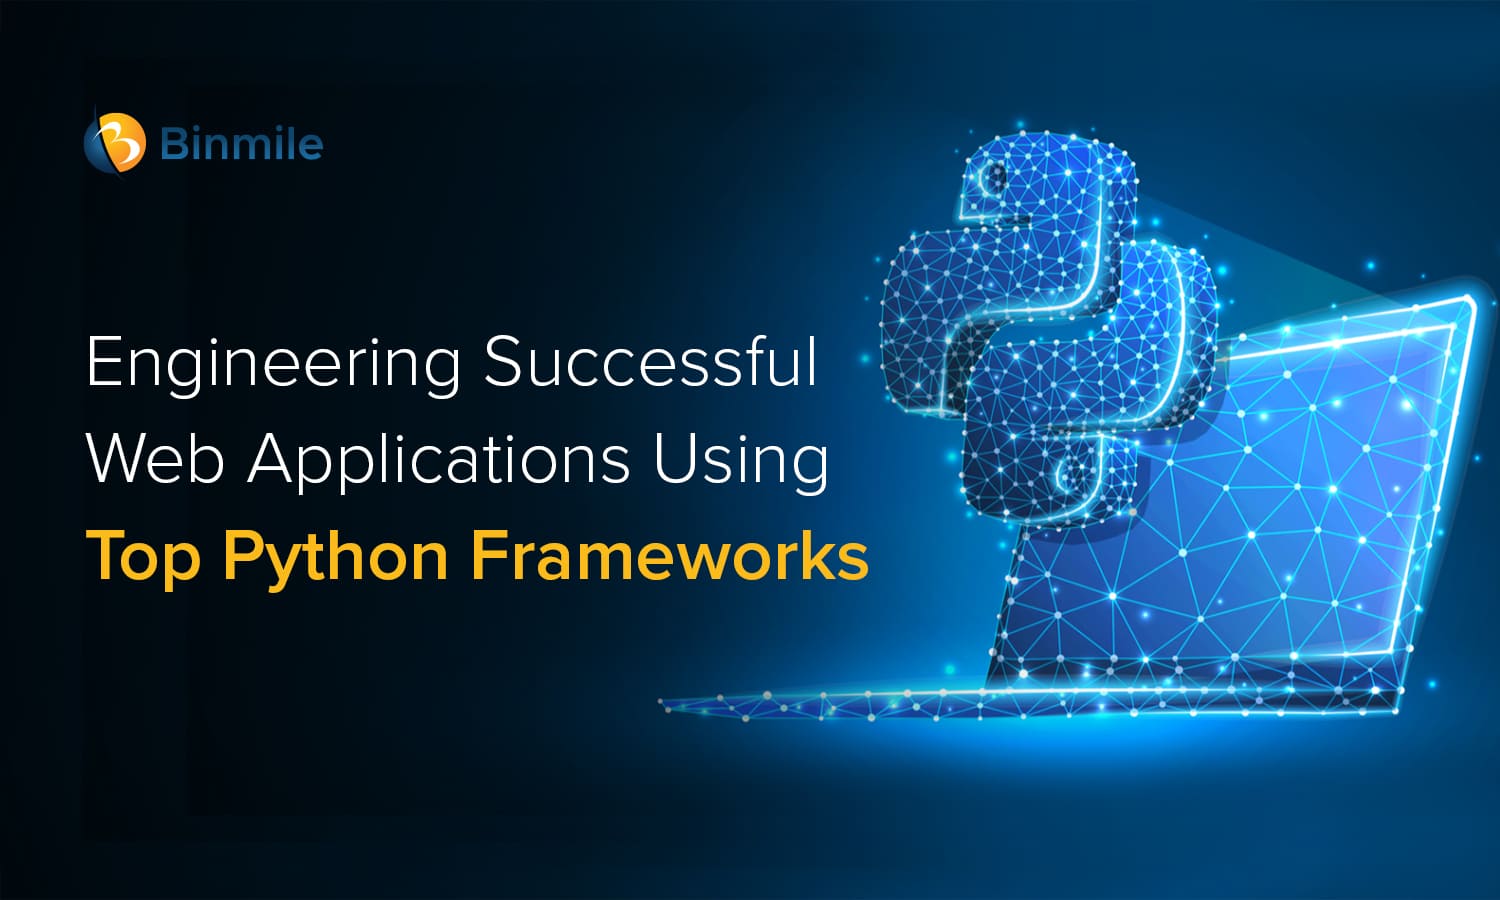 Top 7 Python Frameworks to Engineer Successful Web Application Development